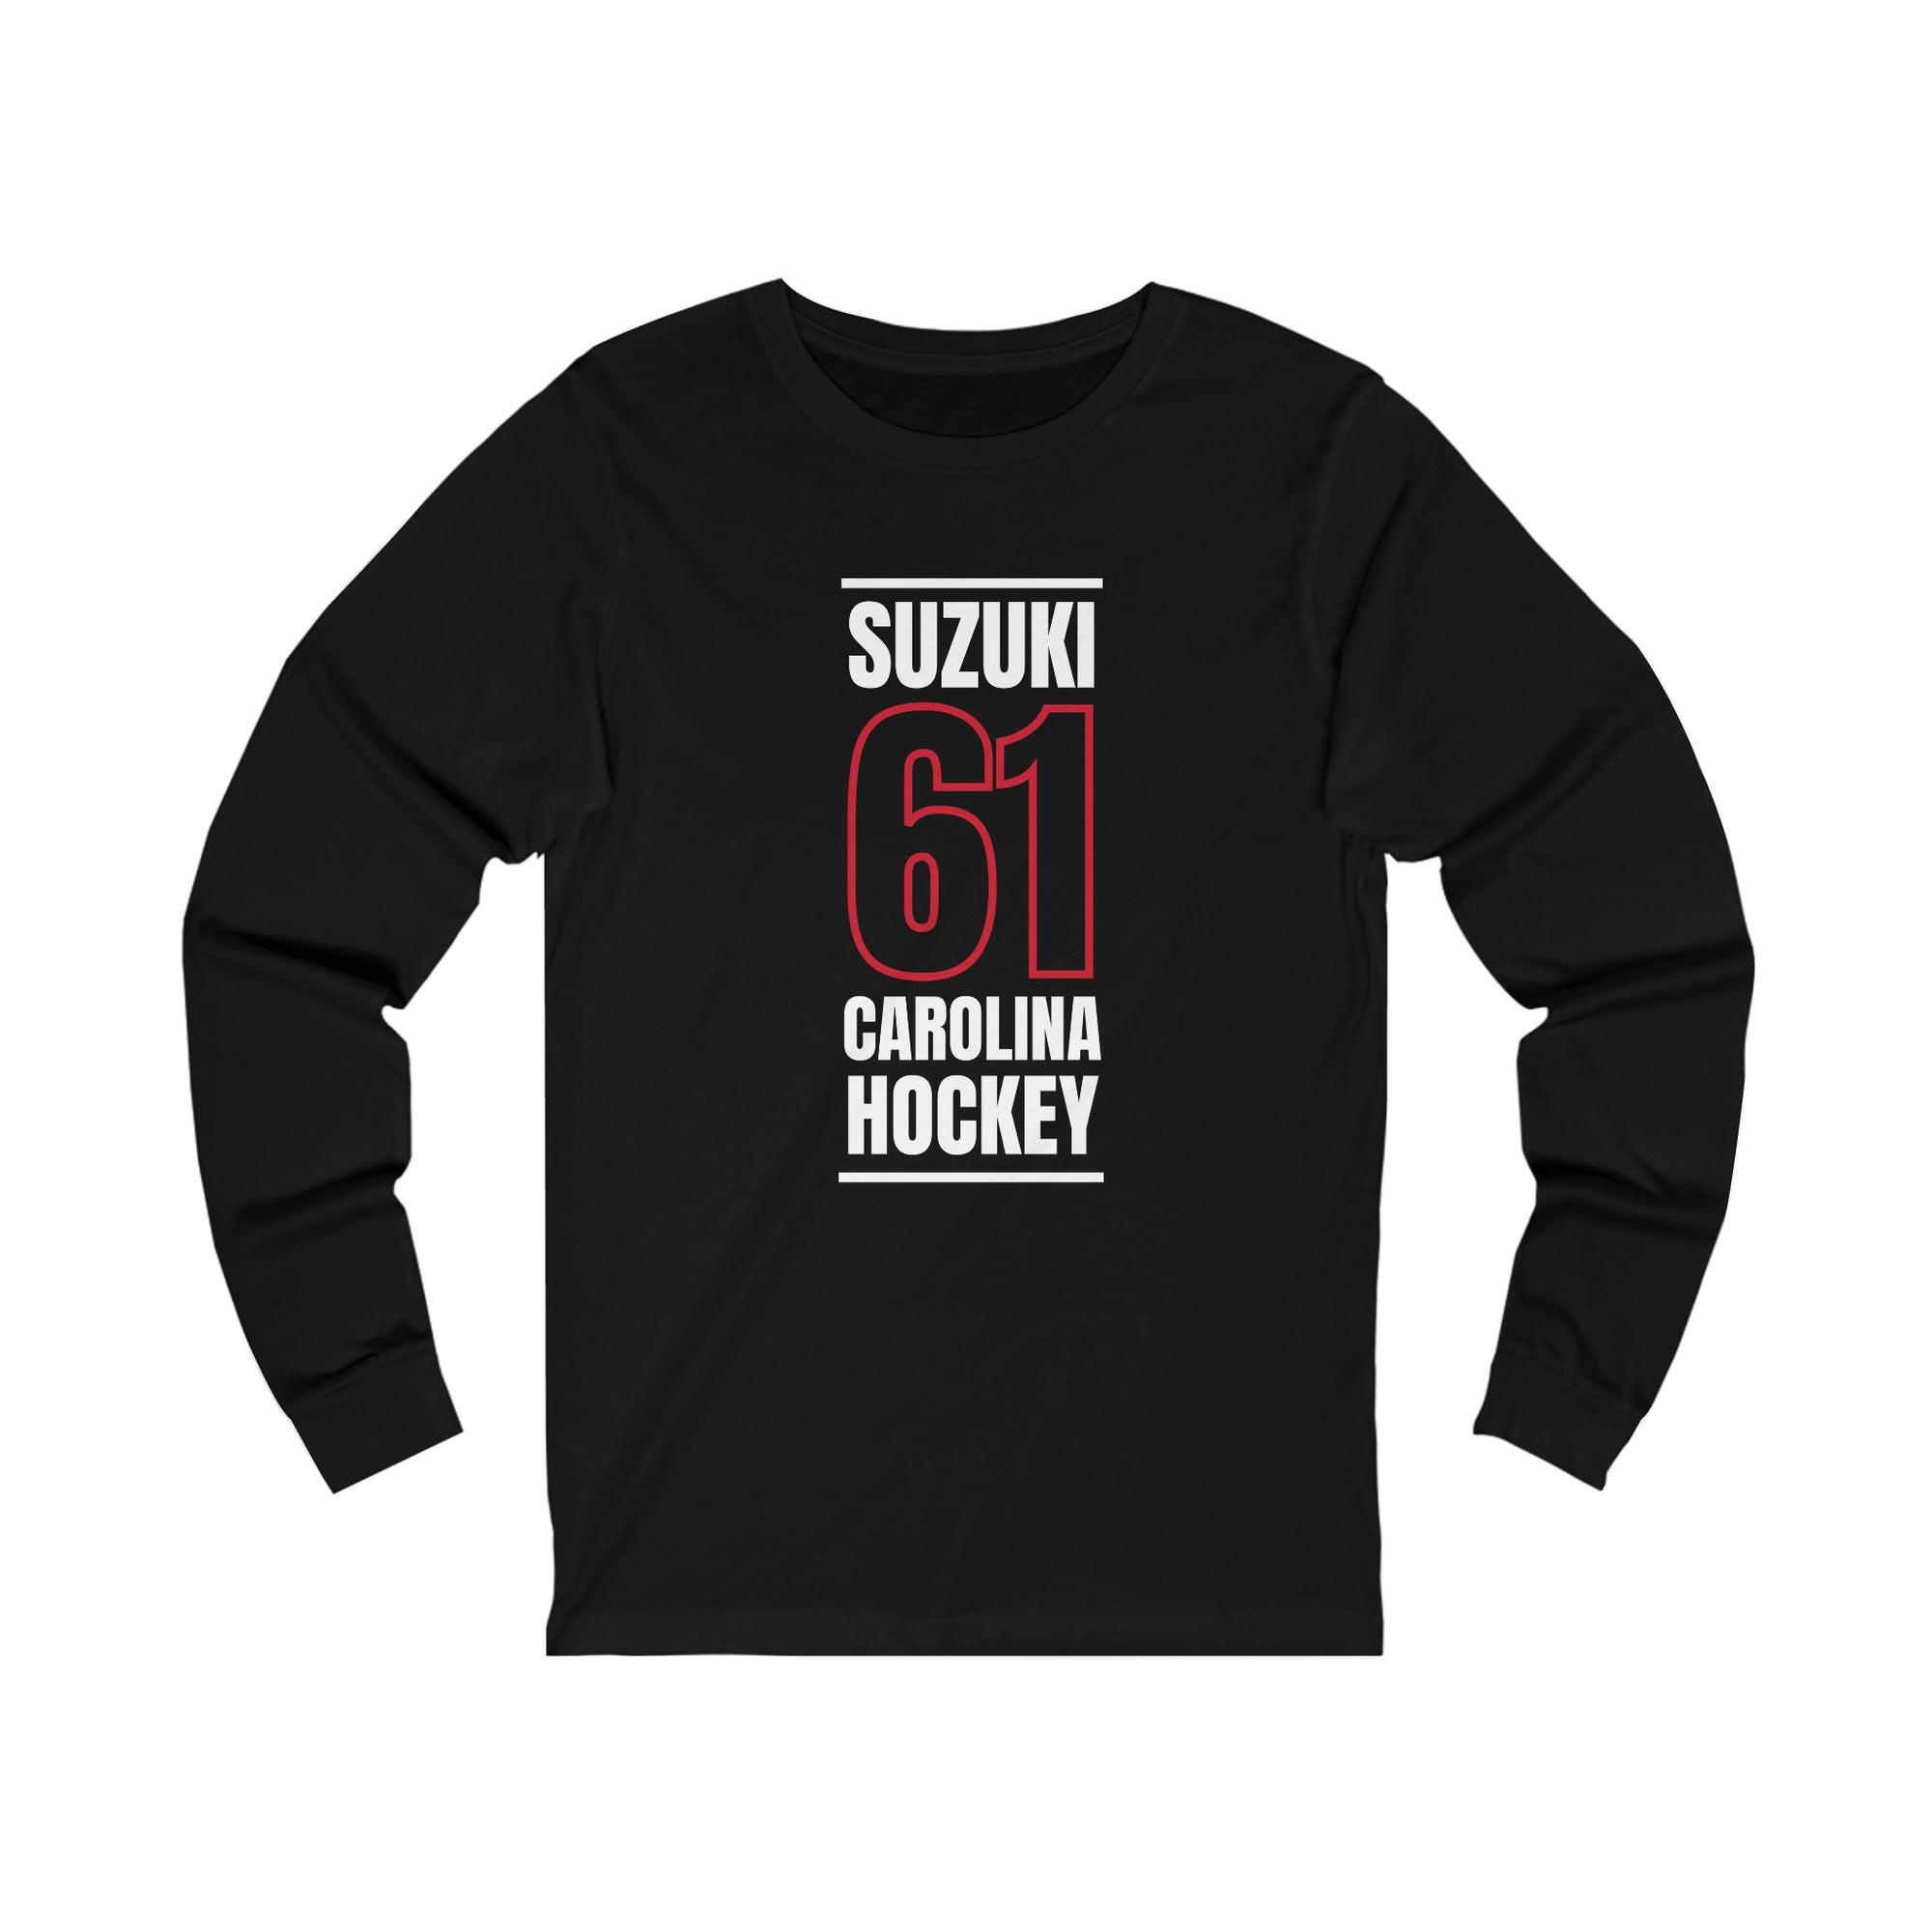 Suzuki 61 Carolina Hockey Black Vertical Design Unisex Jersey Long Sleeve Shirt